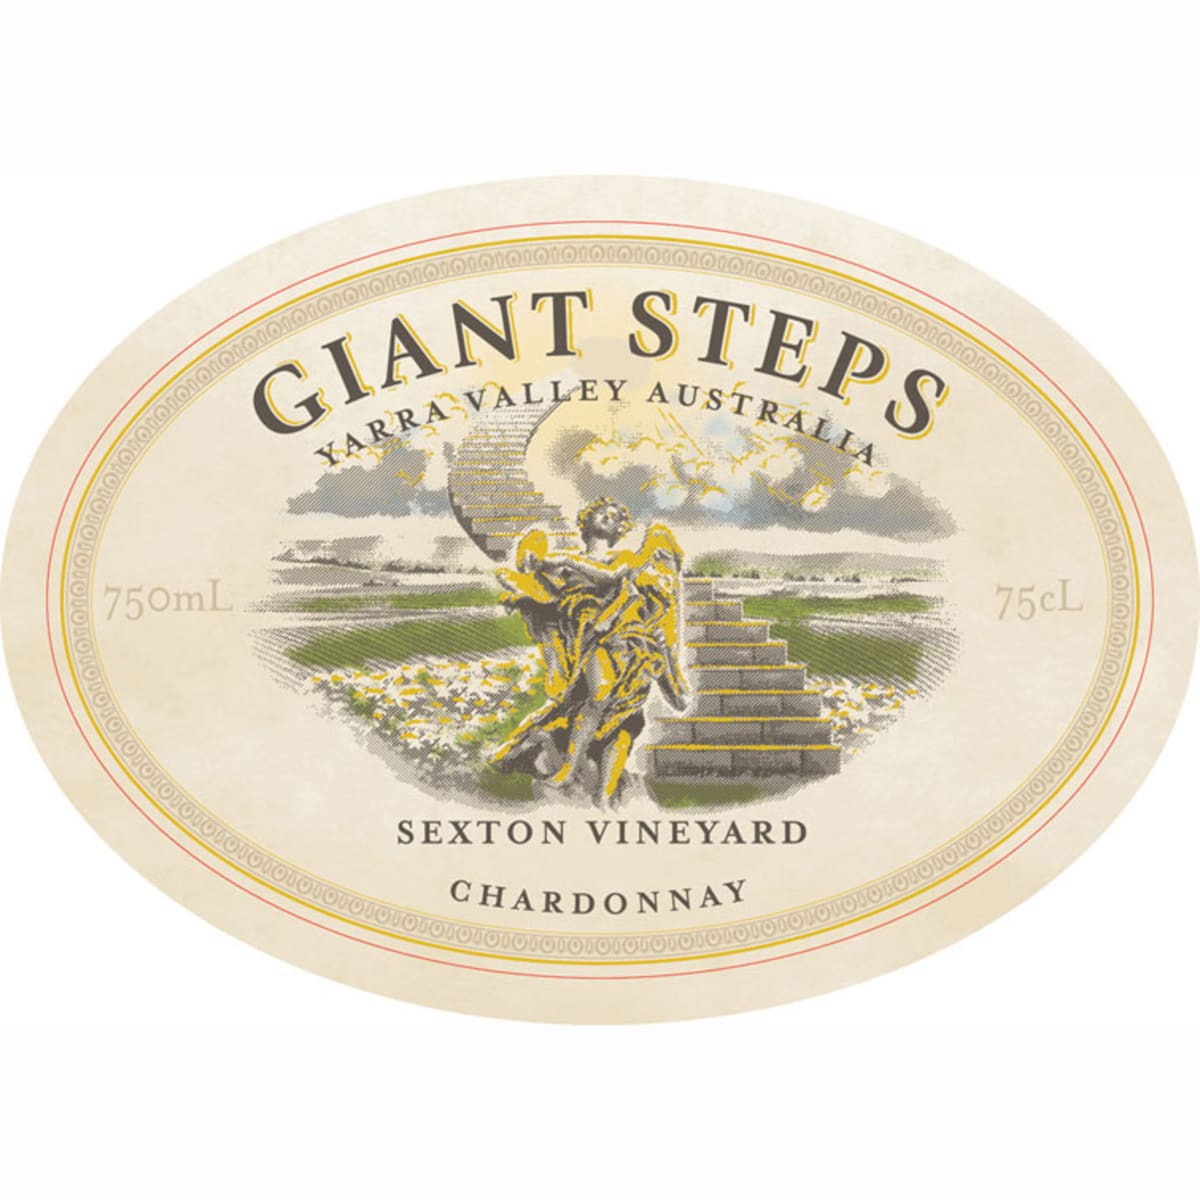 Giant Steps Sexton Vineyard Chardonnay 2008 Front Label